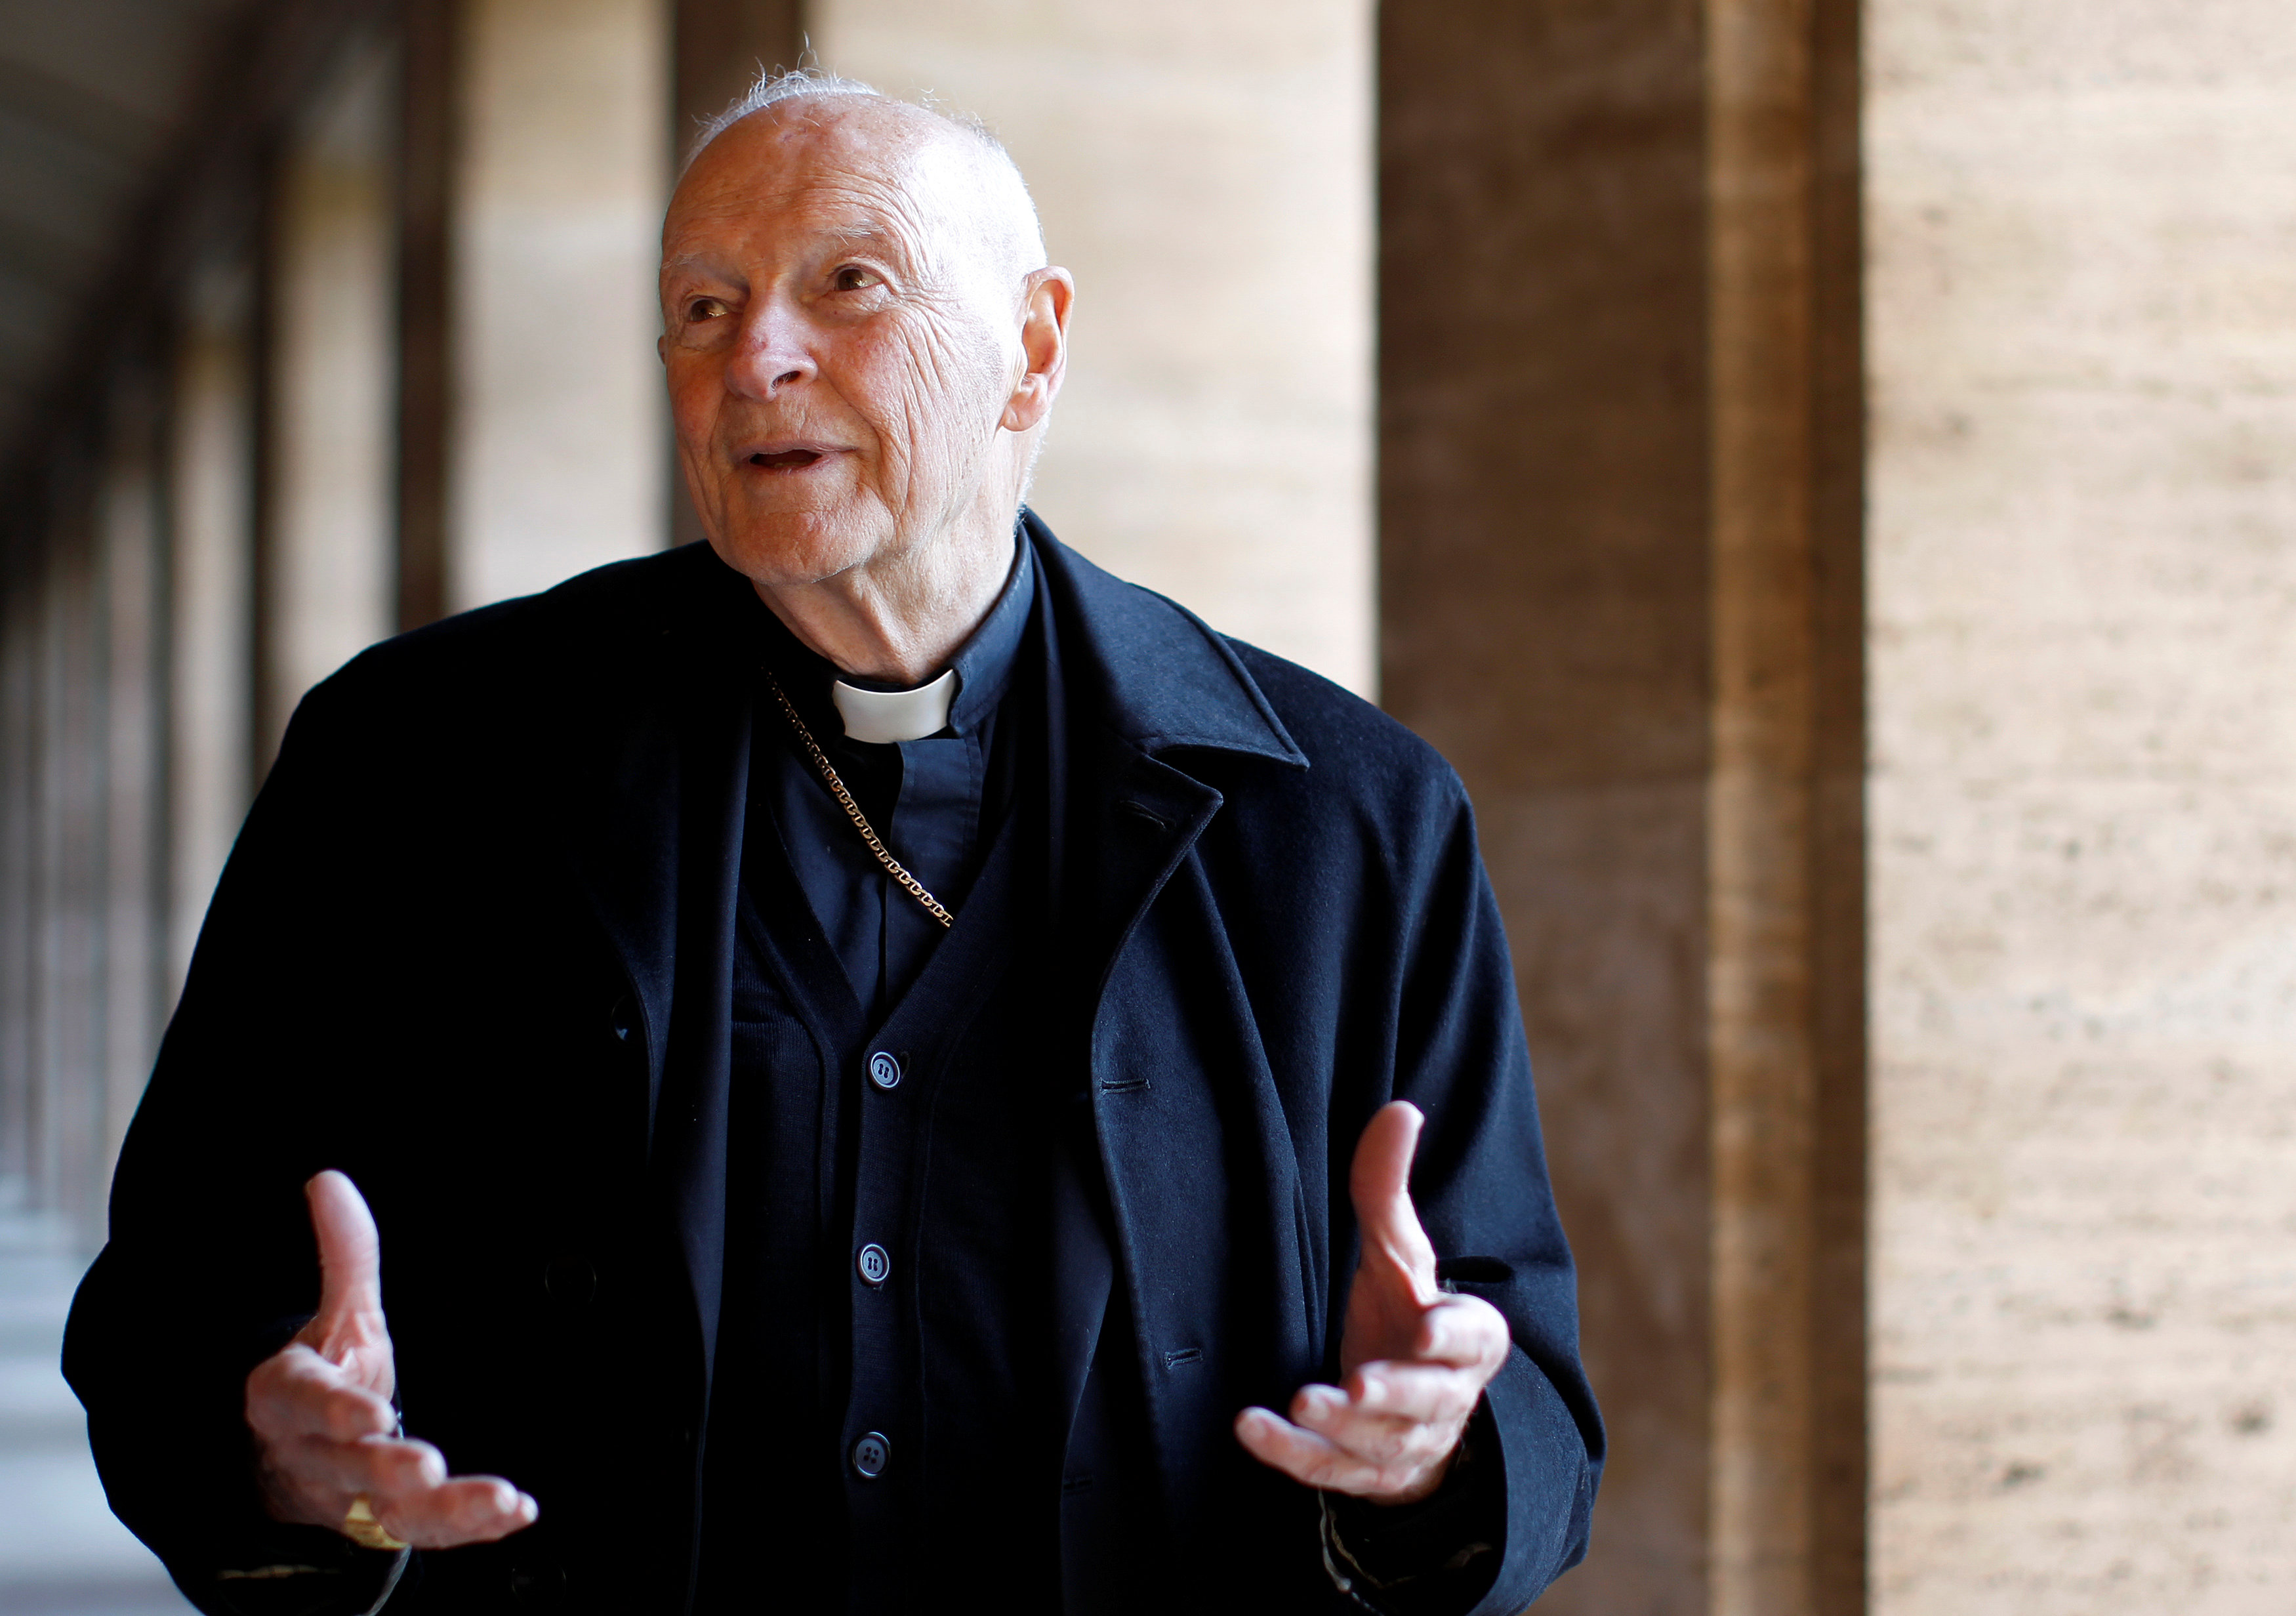 Two Catholic universities rescind Archbishop McCarrick's honorary degrees